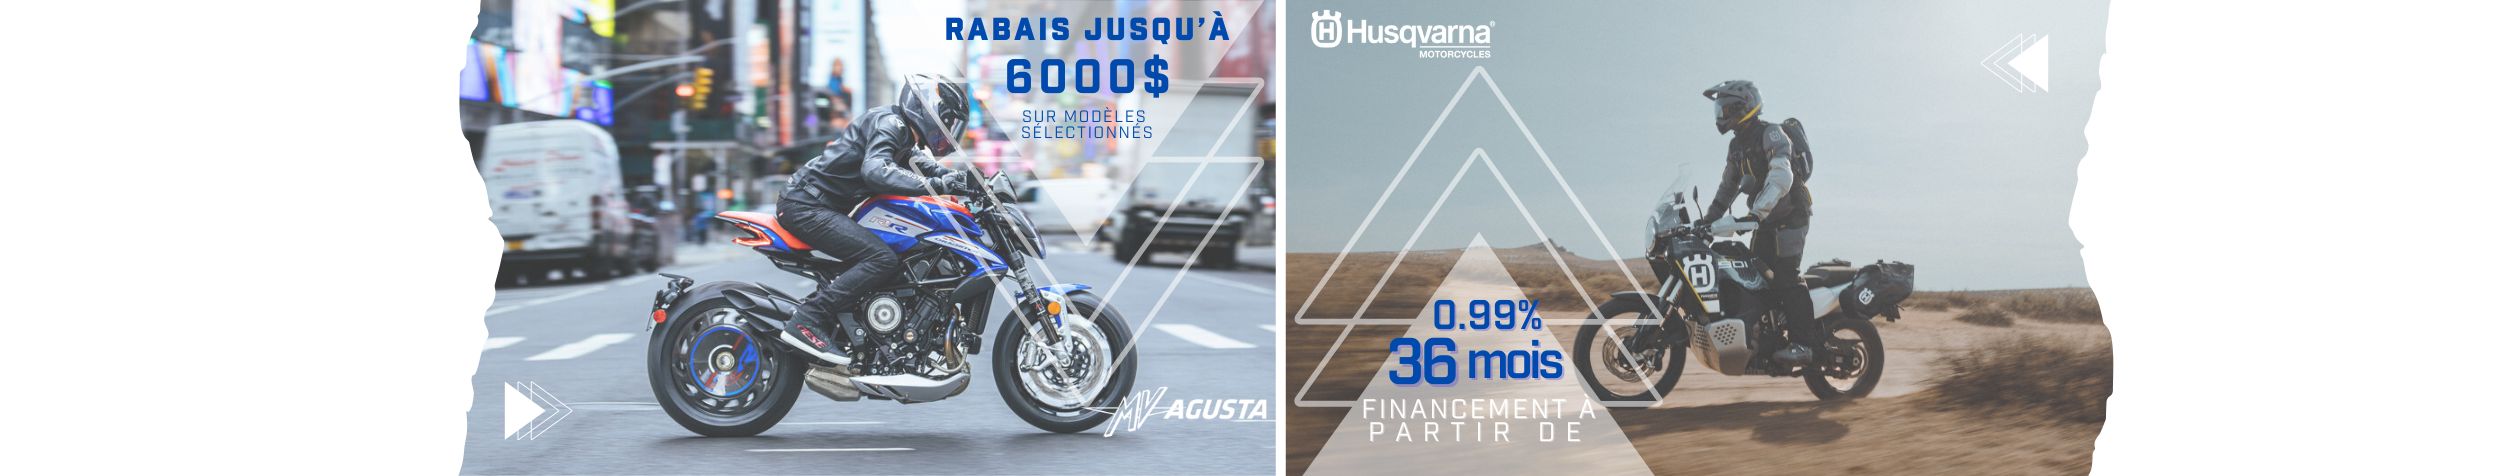 MV Agusta – Husqvarna